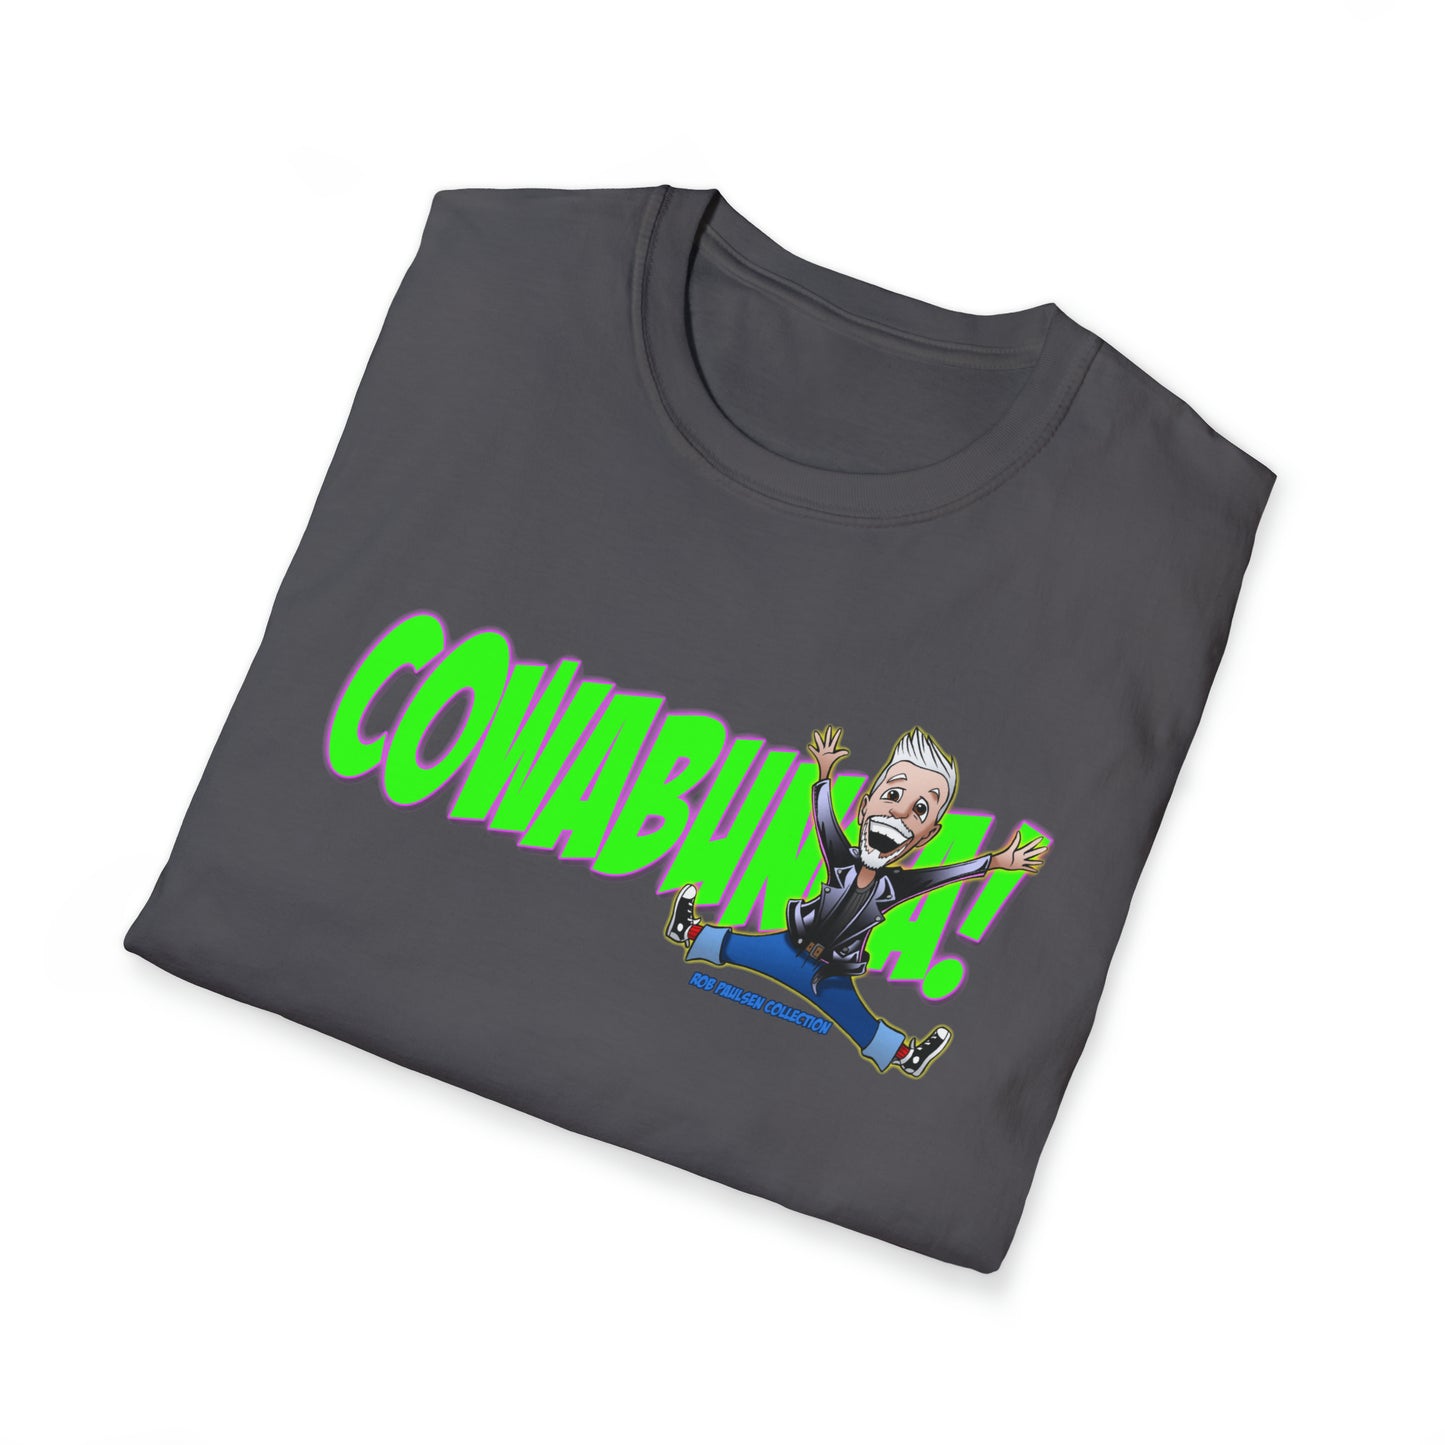 Rob Paulsen COWABUNGA T-Shirt (Unisex Softstyle) 6 Colors